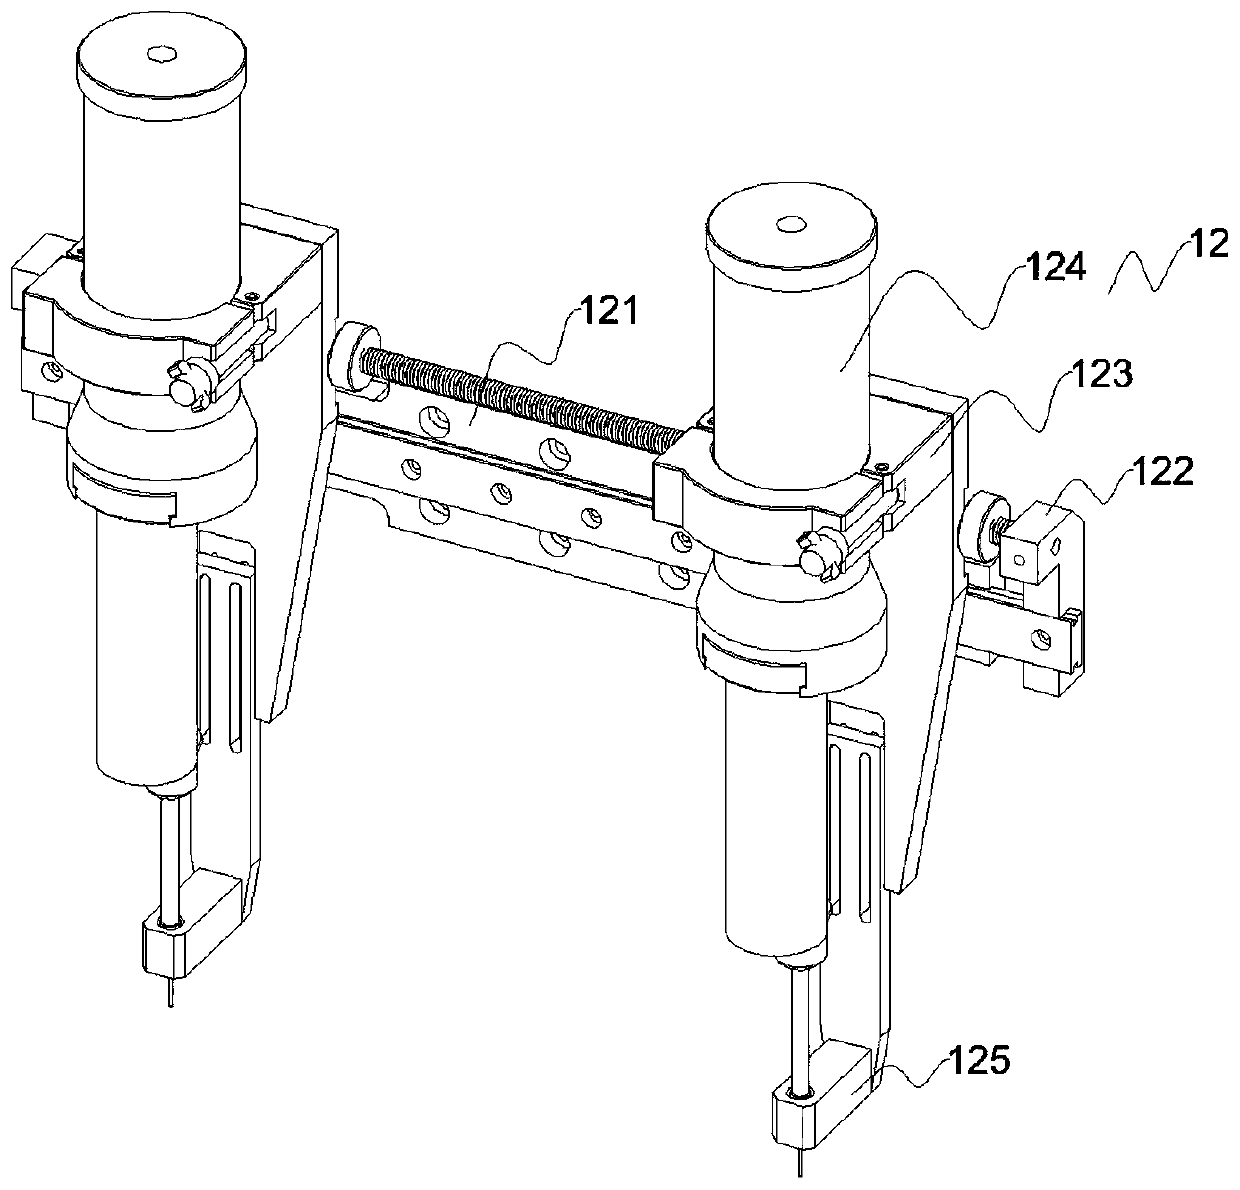 Jig overturning and double valve glue dispensing mechanism